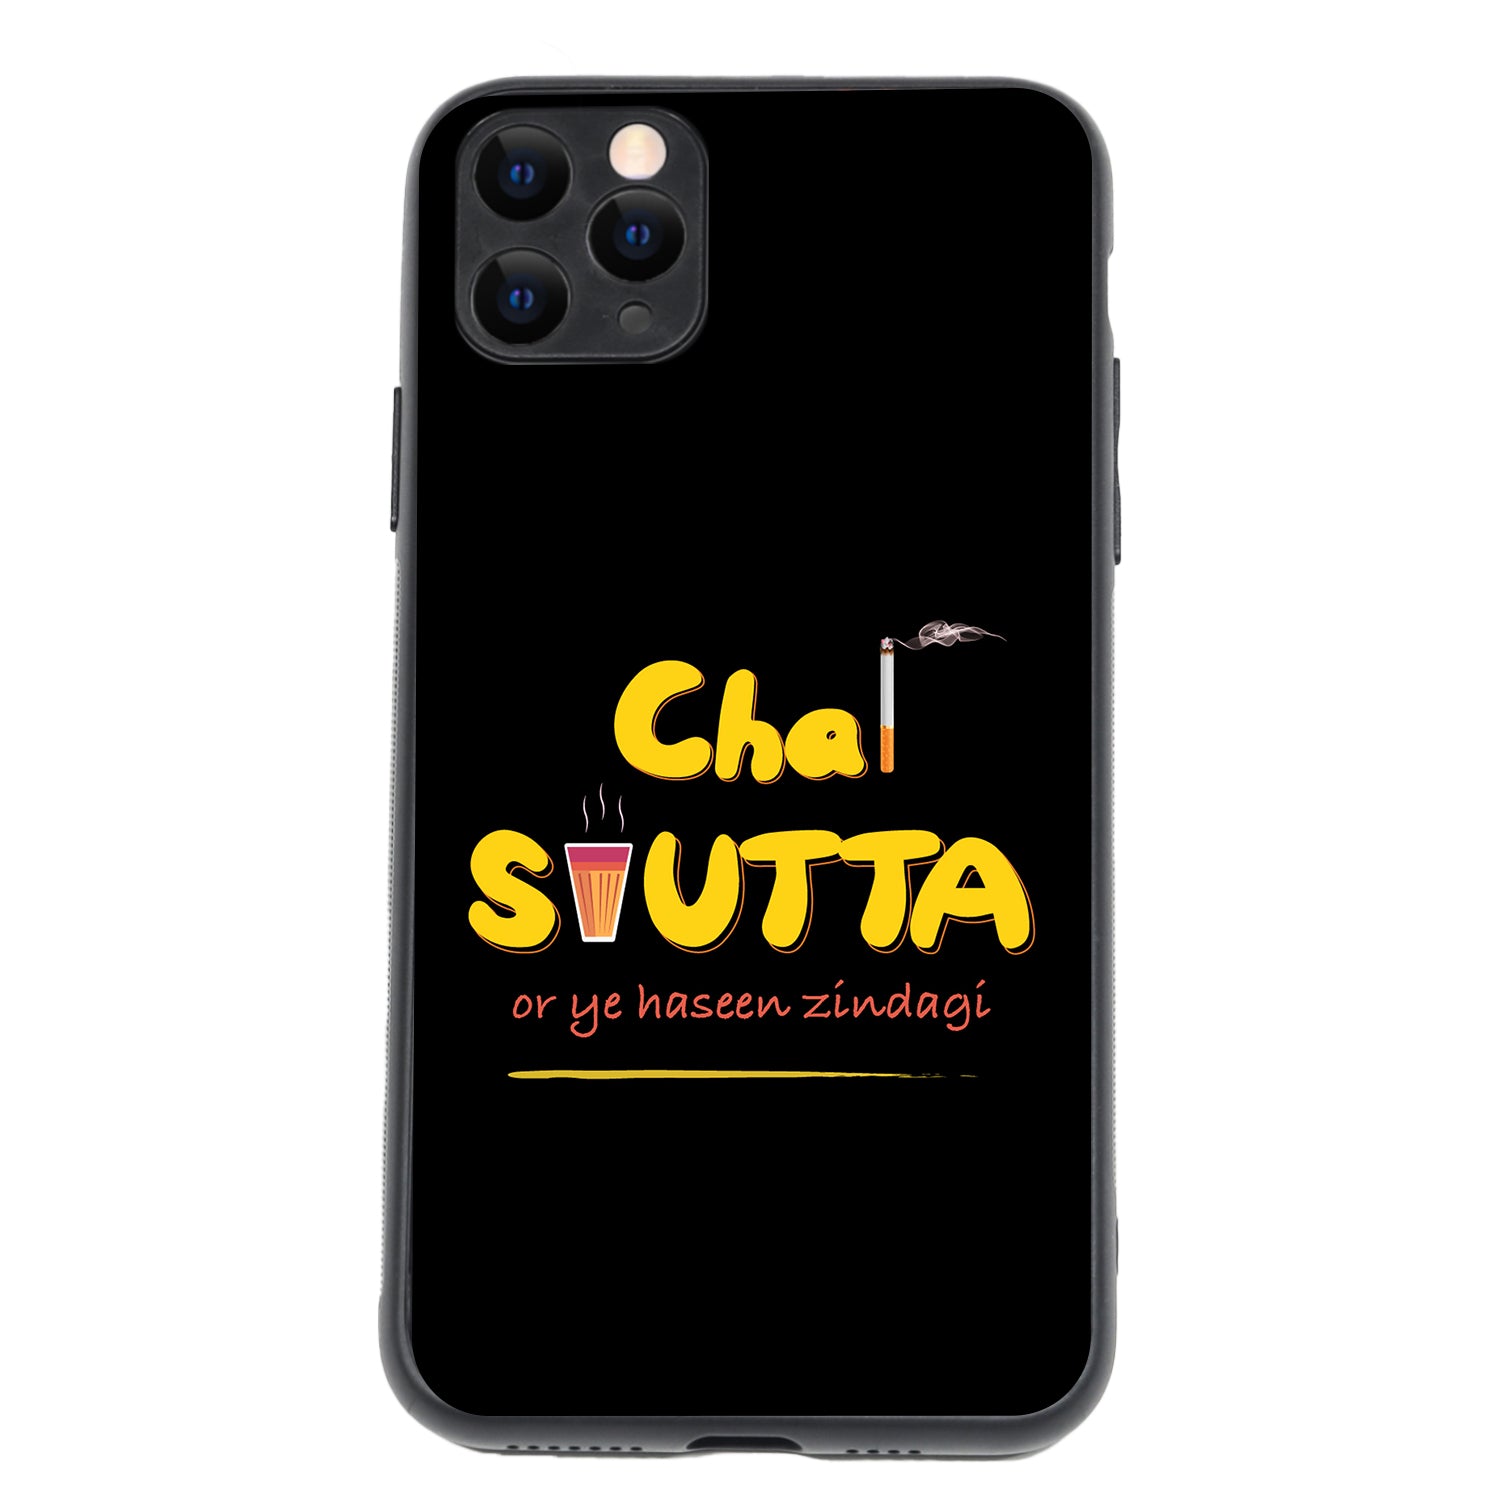 Chai-Sutta Motivational Quotes iPhone 11 Pro Max Case